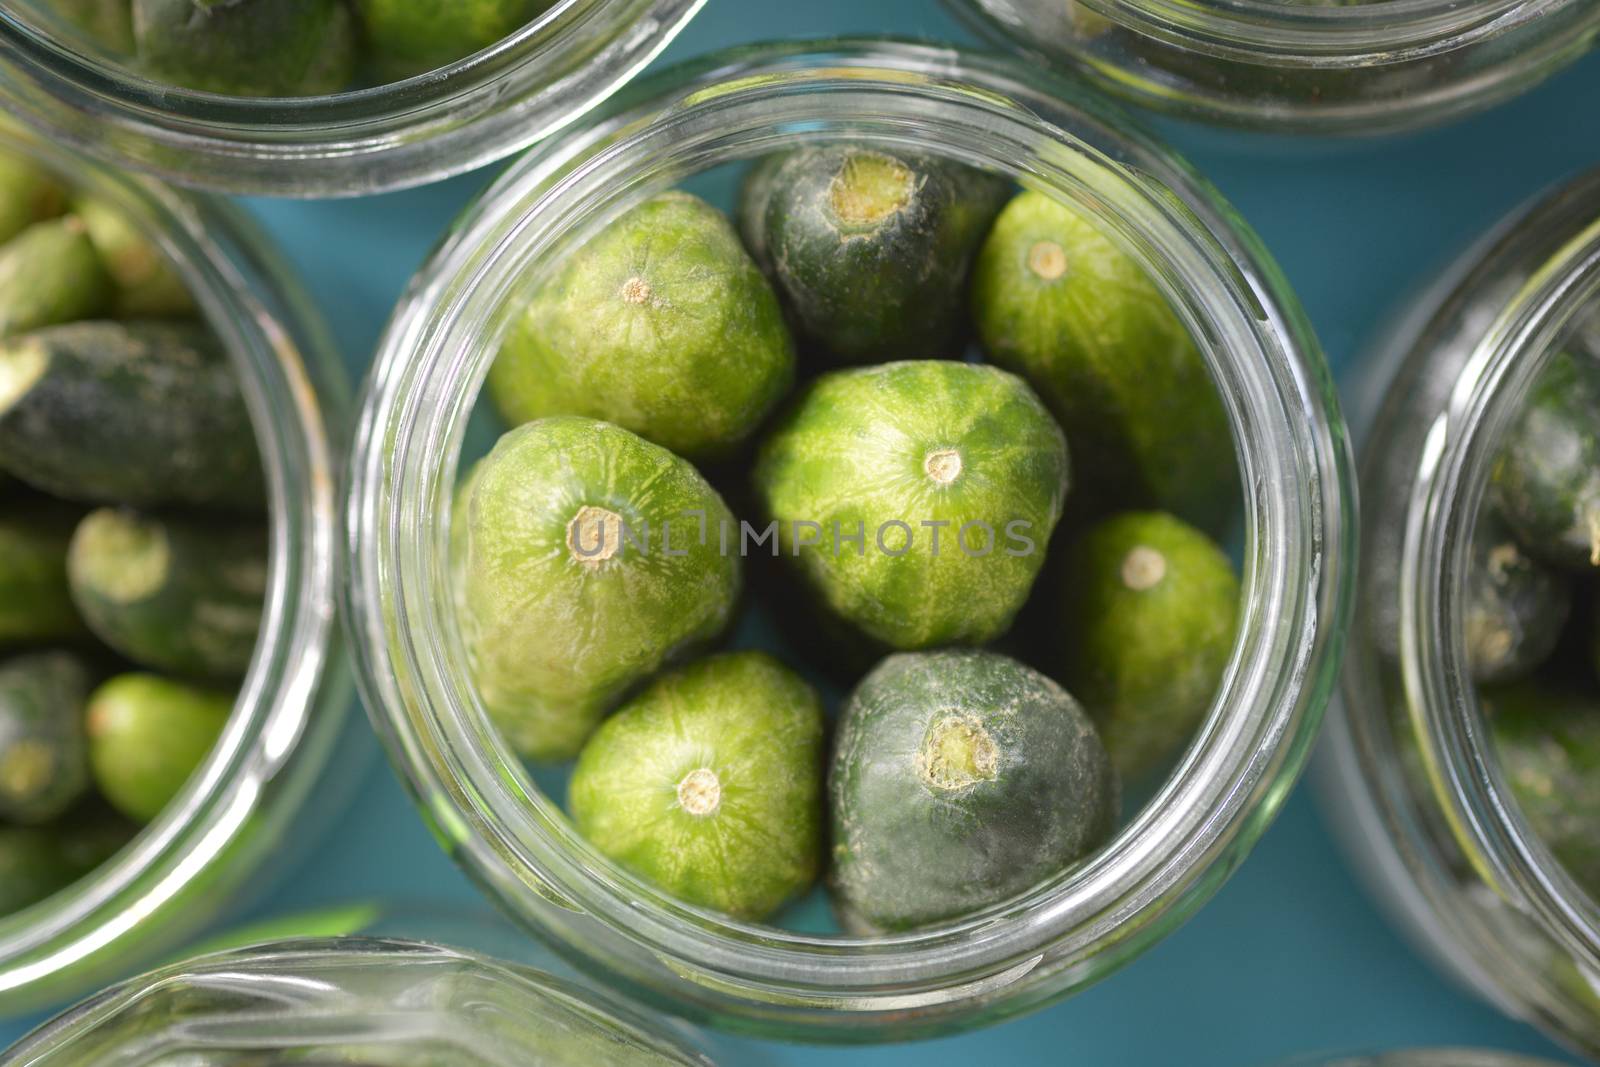 Cucumbers in a jars - preparing pickles